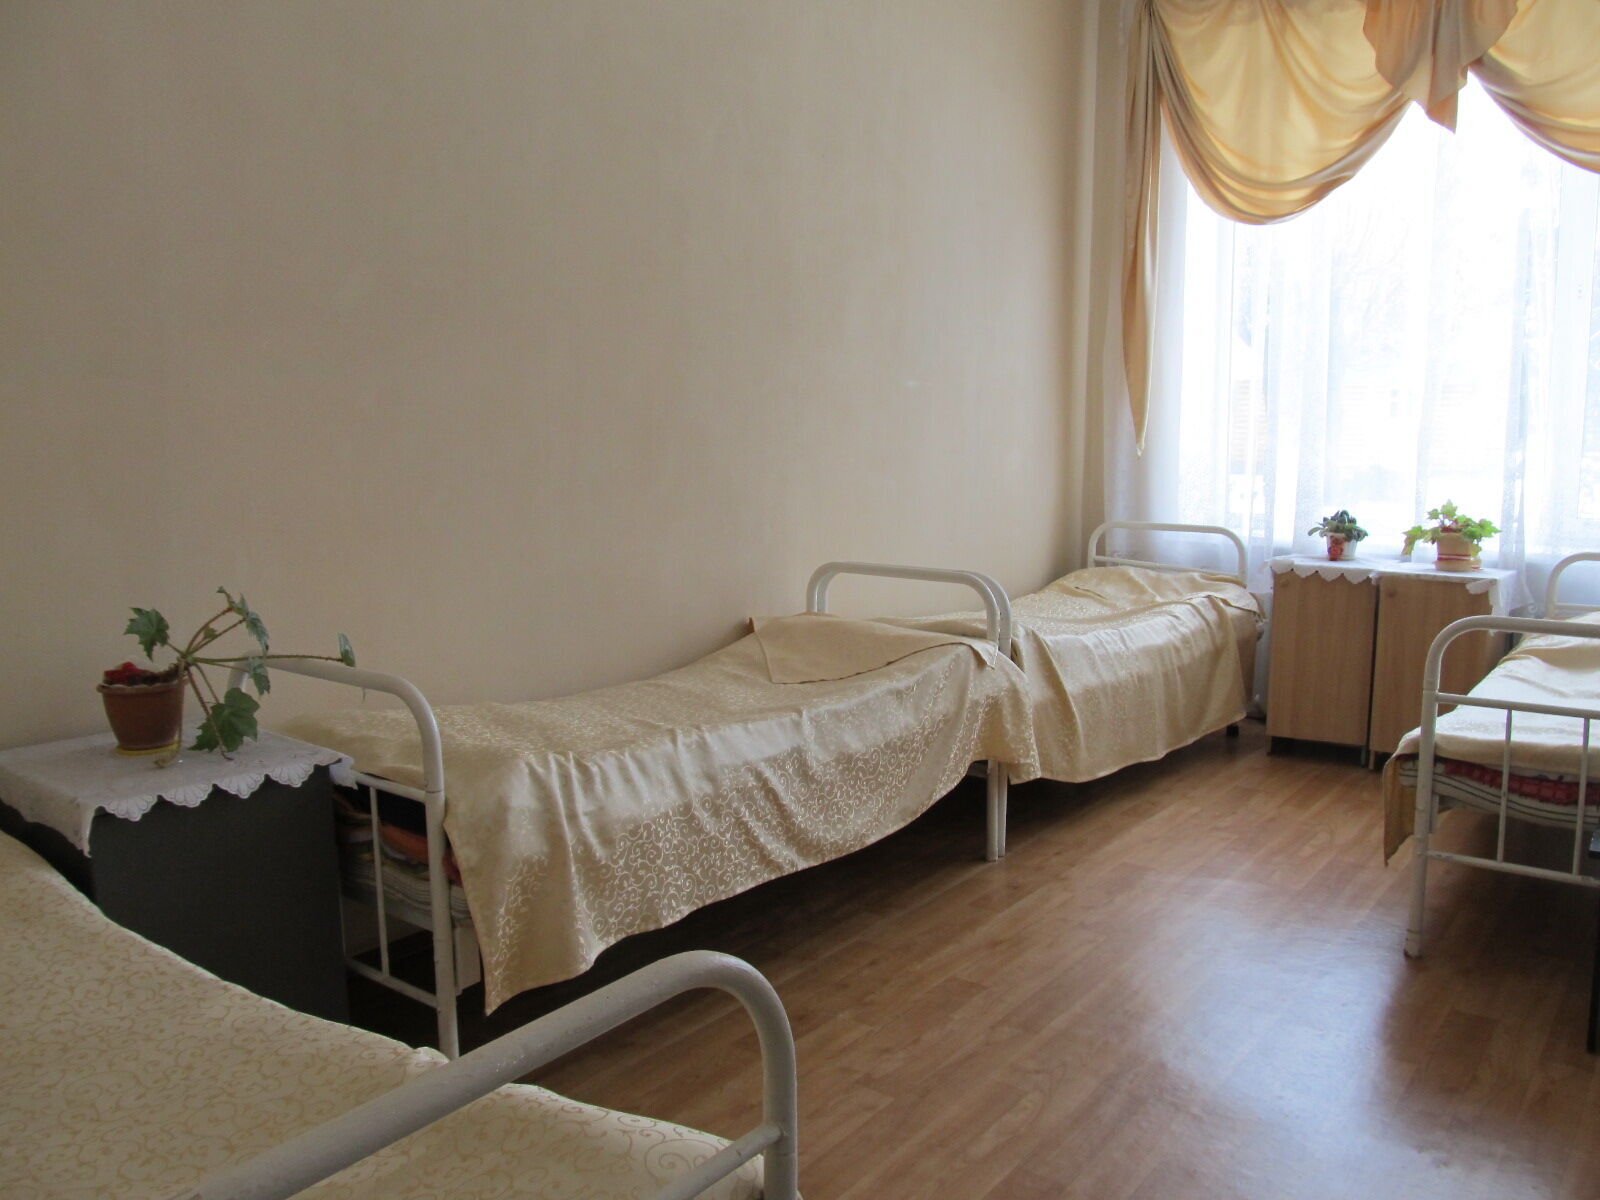 Комната, где живет Зайцева - фото администрации центра